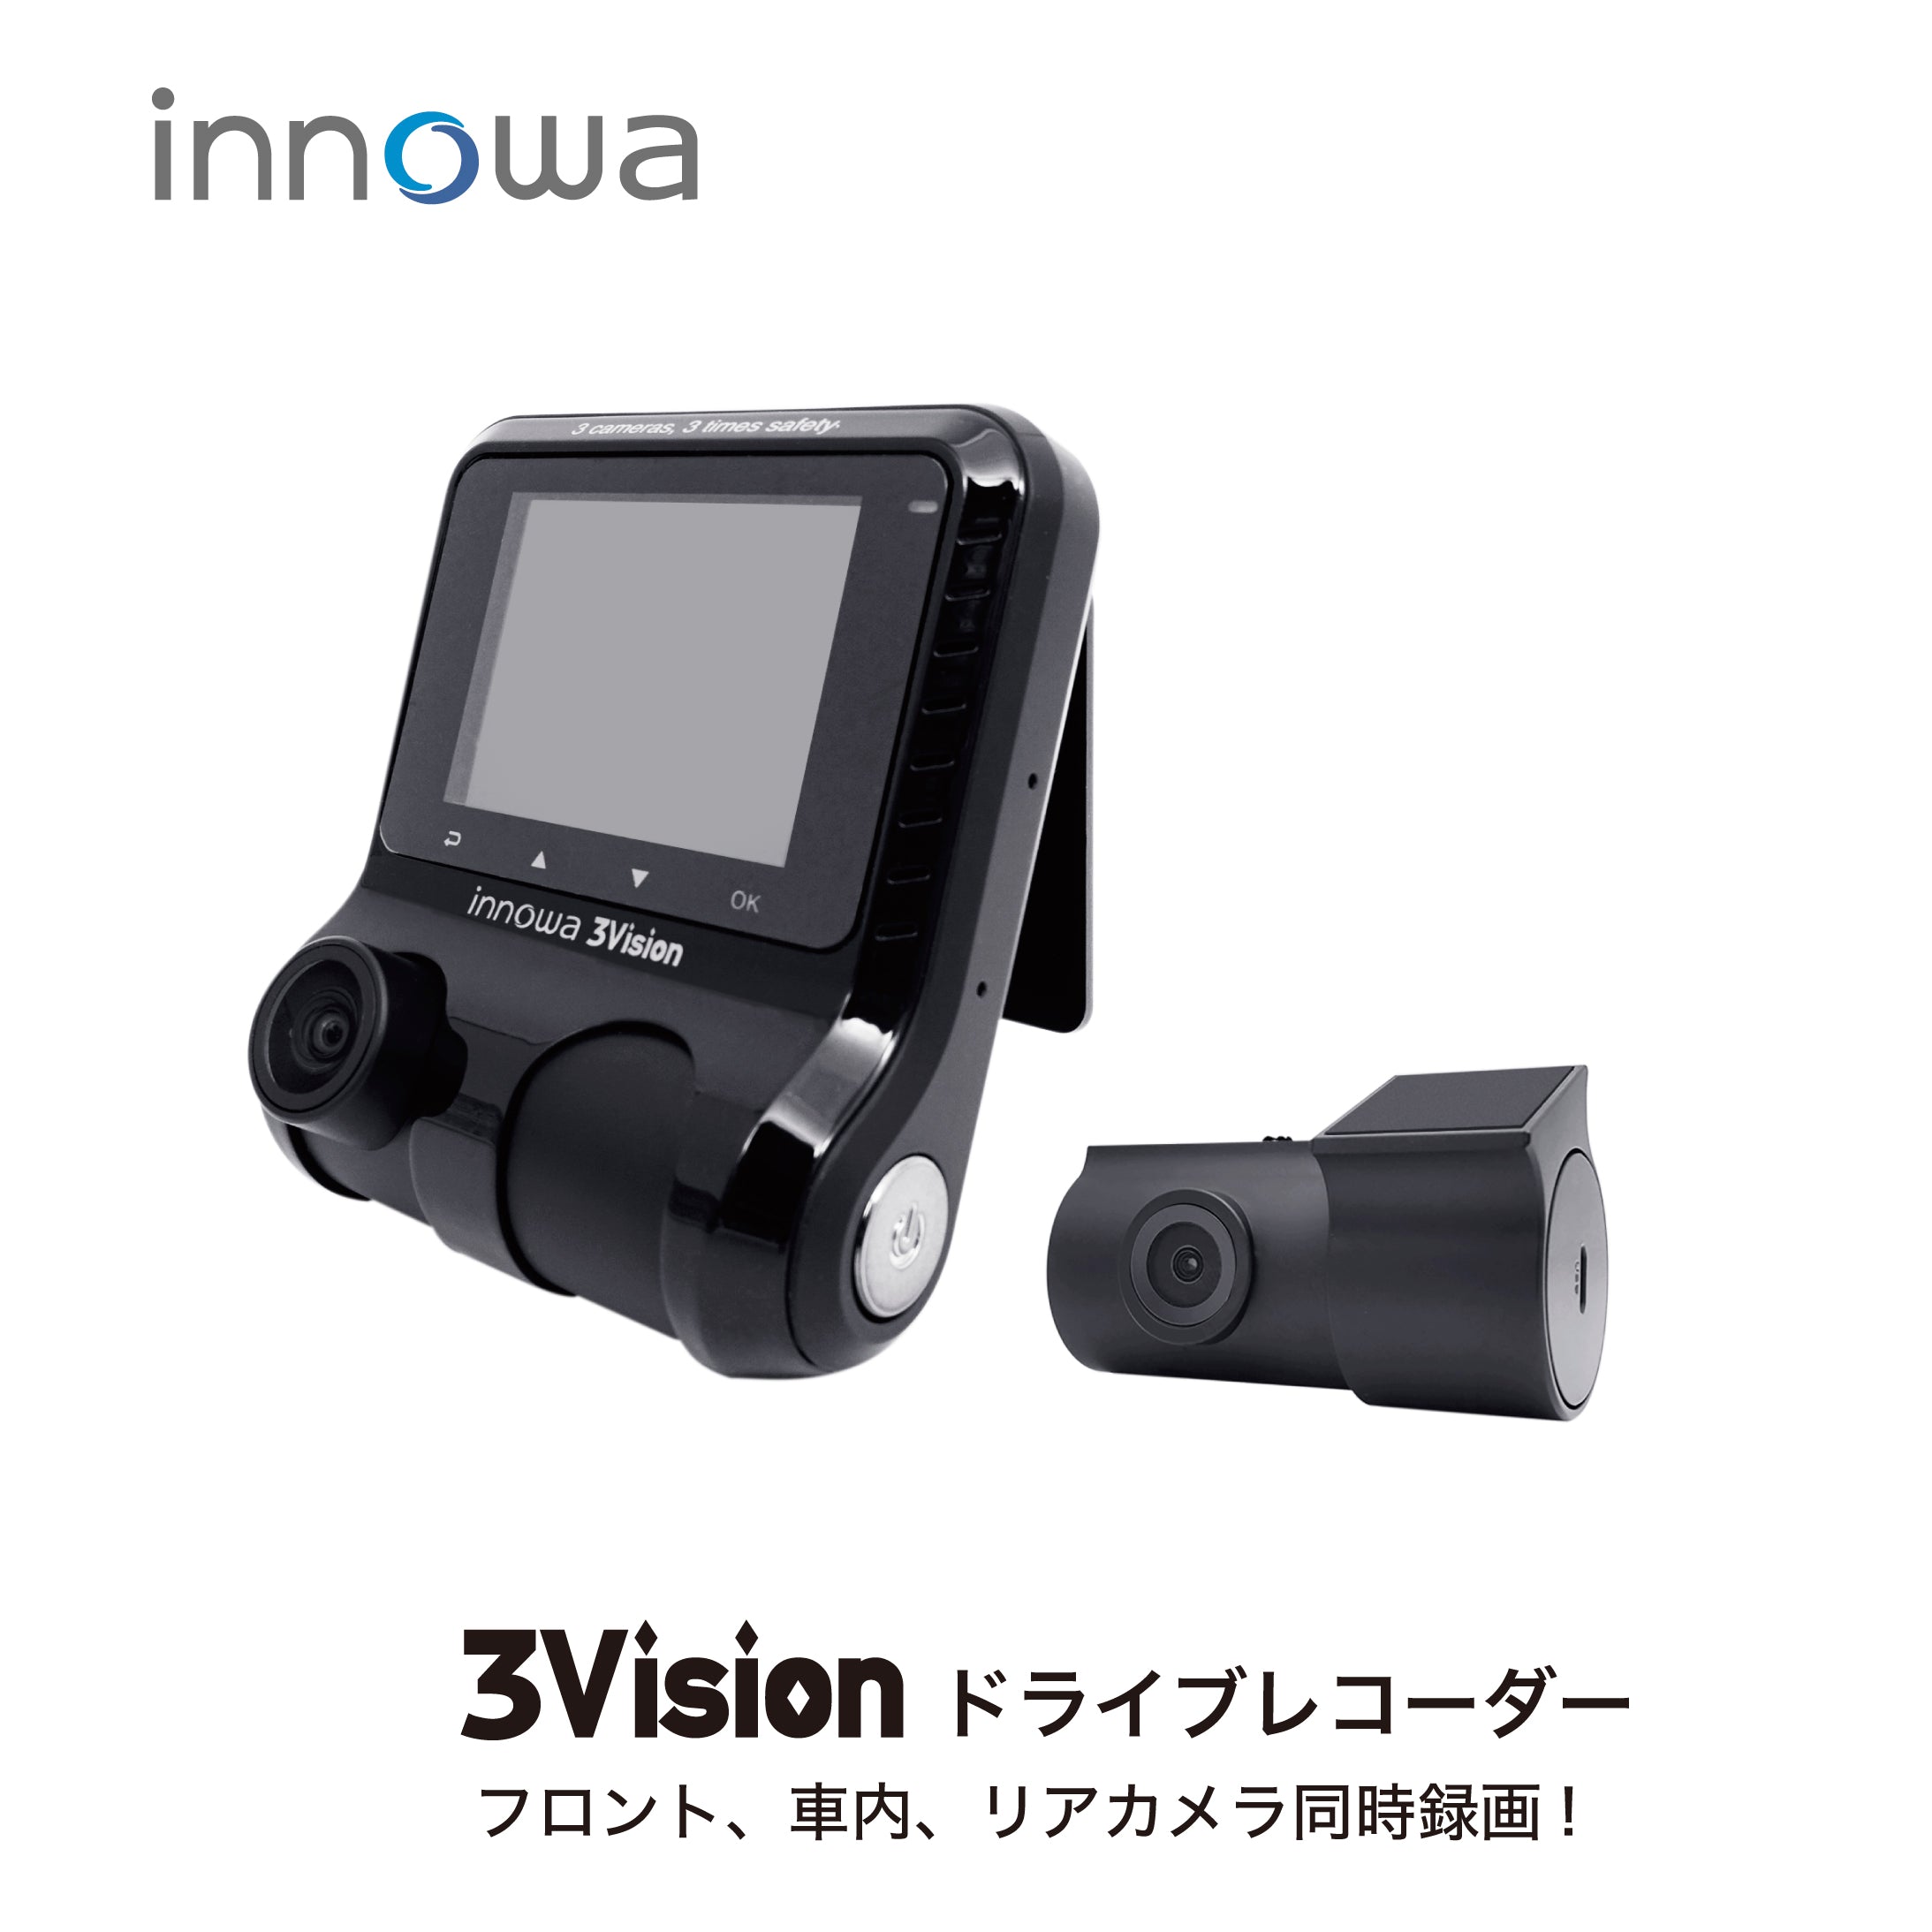 innowa (イノワ) 3Vision 前中後3カメラ同時録画 ドライブレコーダー 